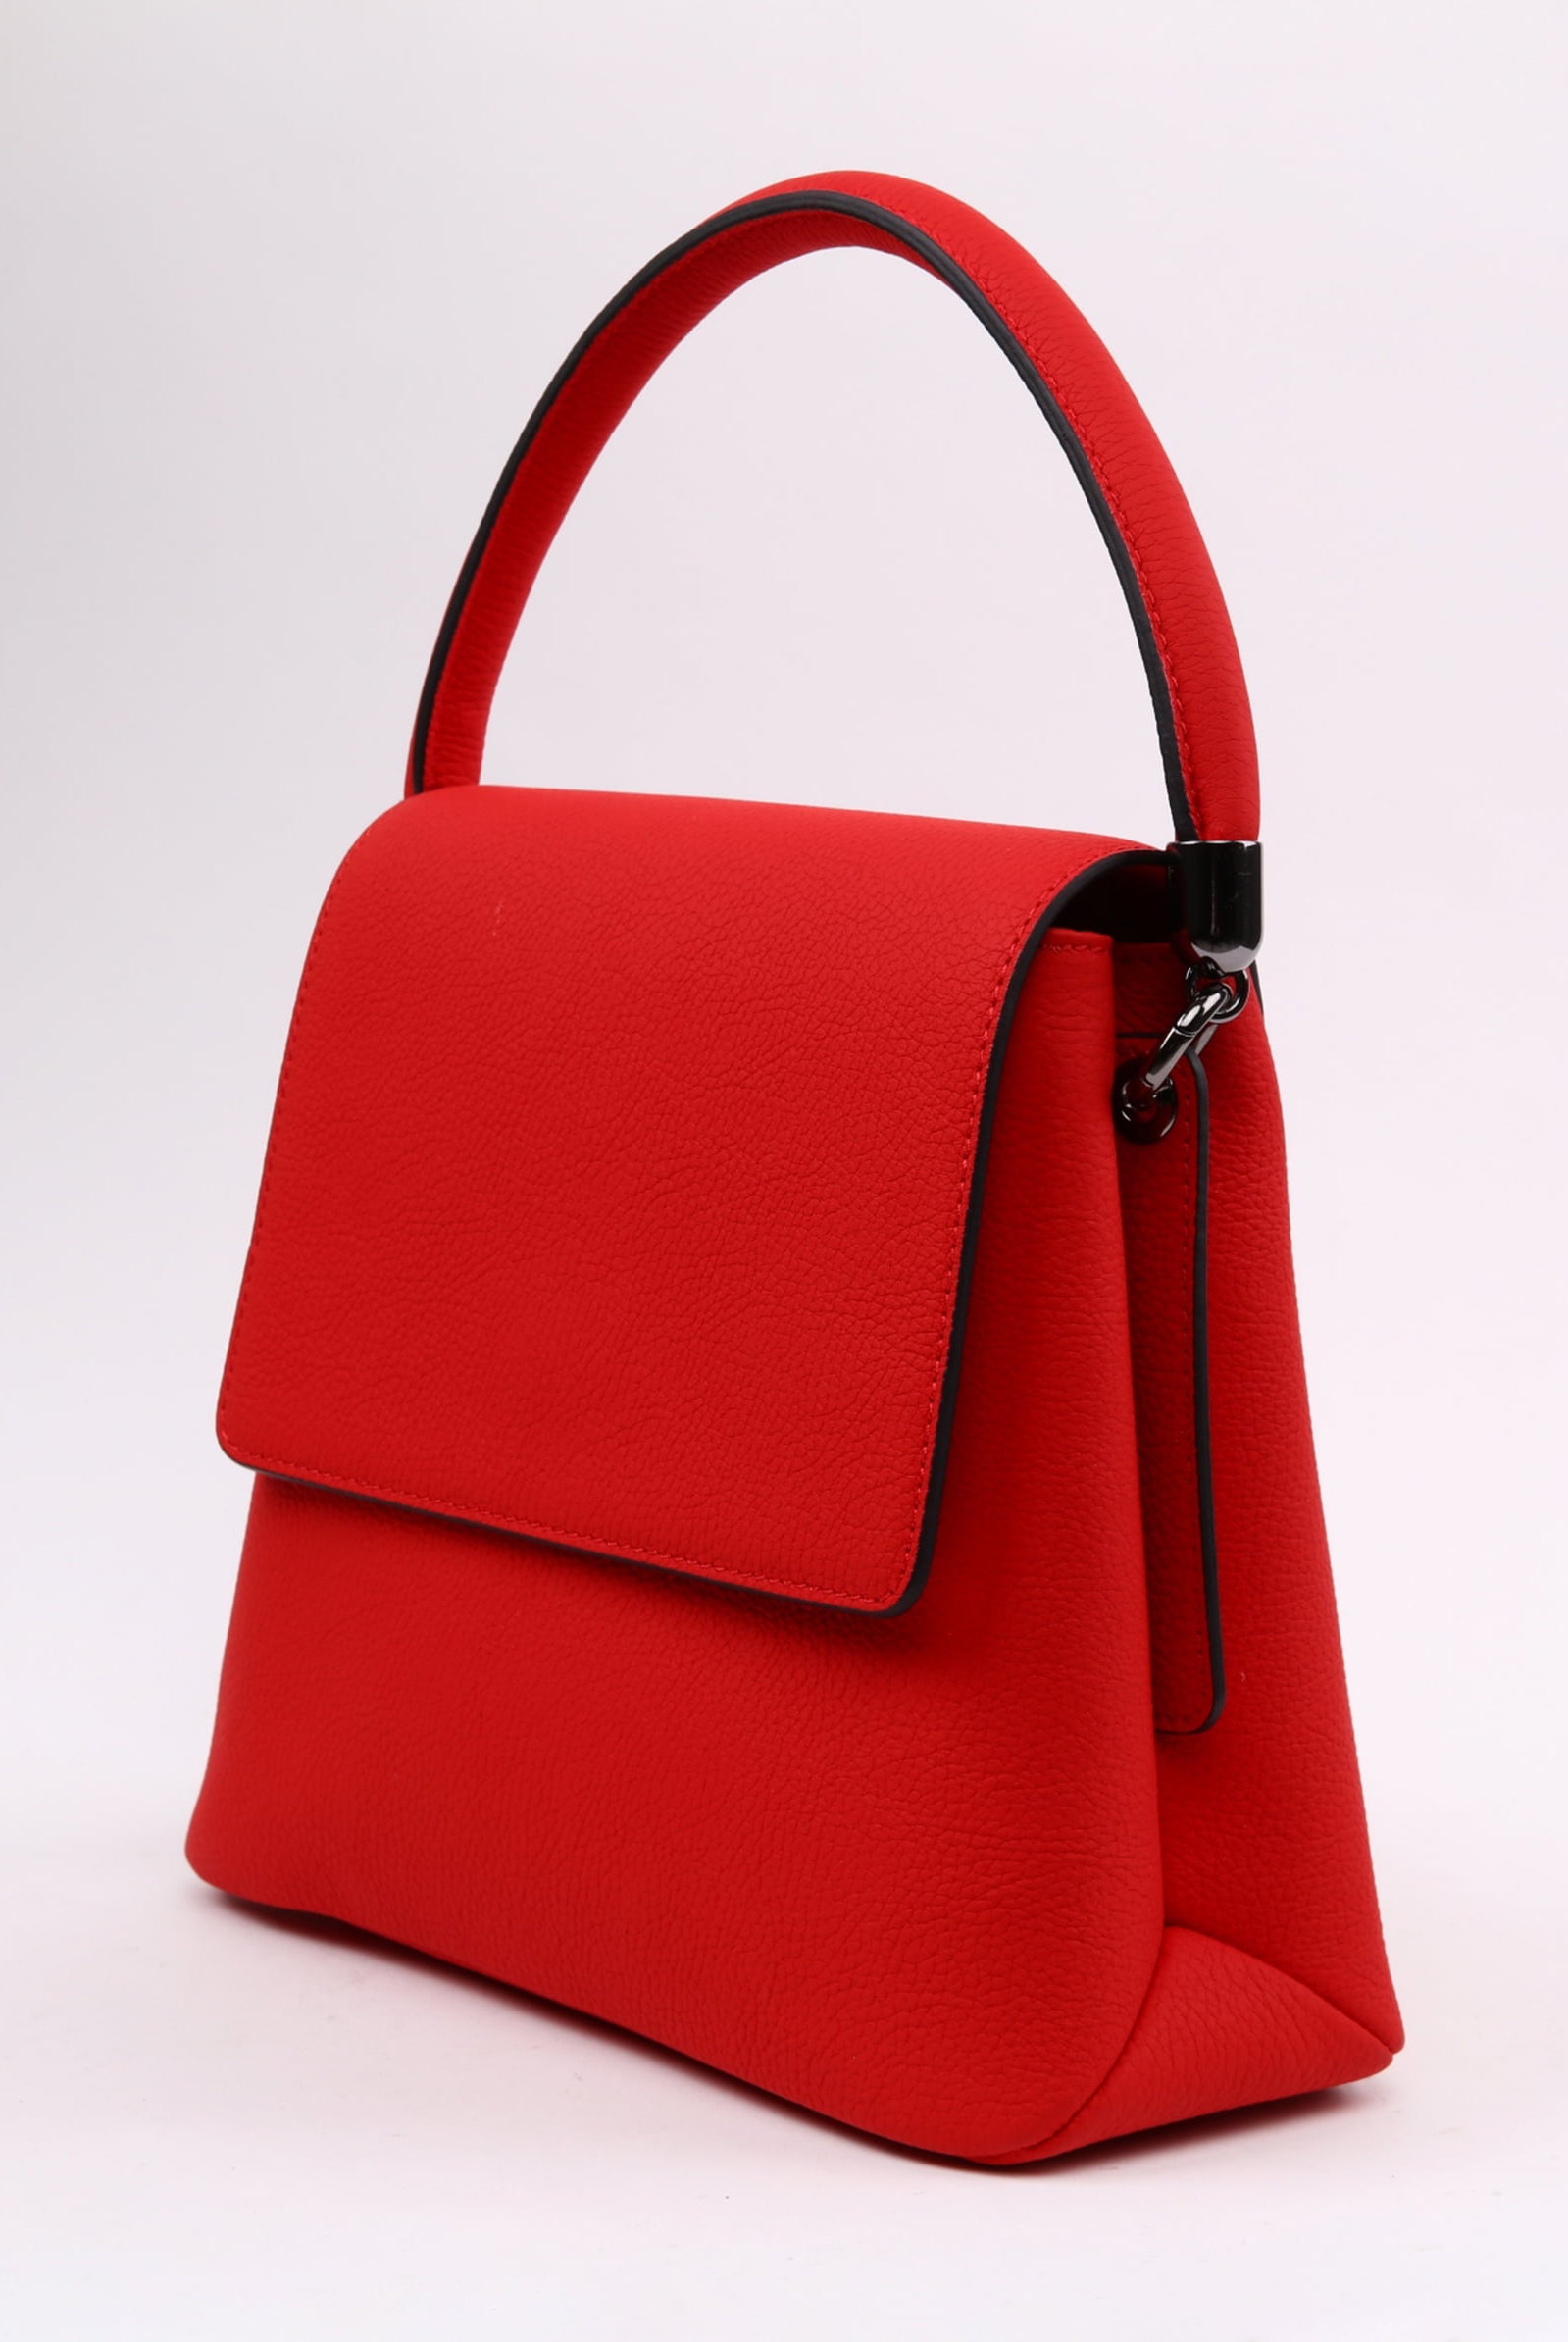 women's red leather handbags